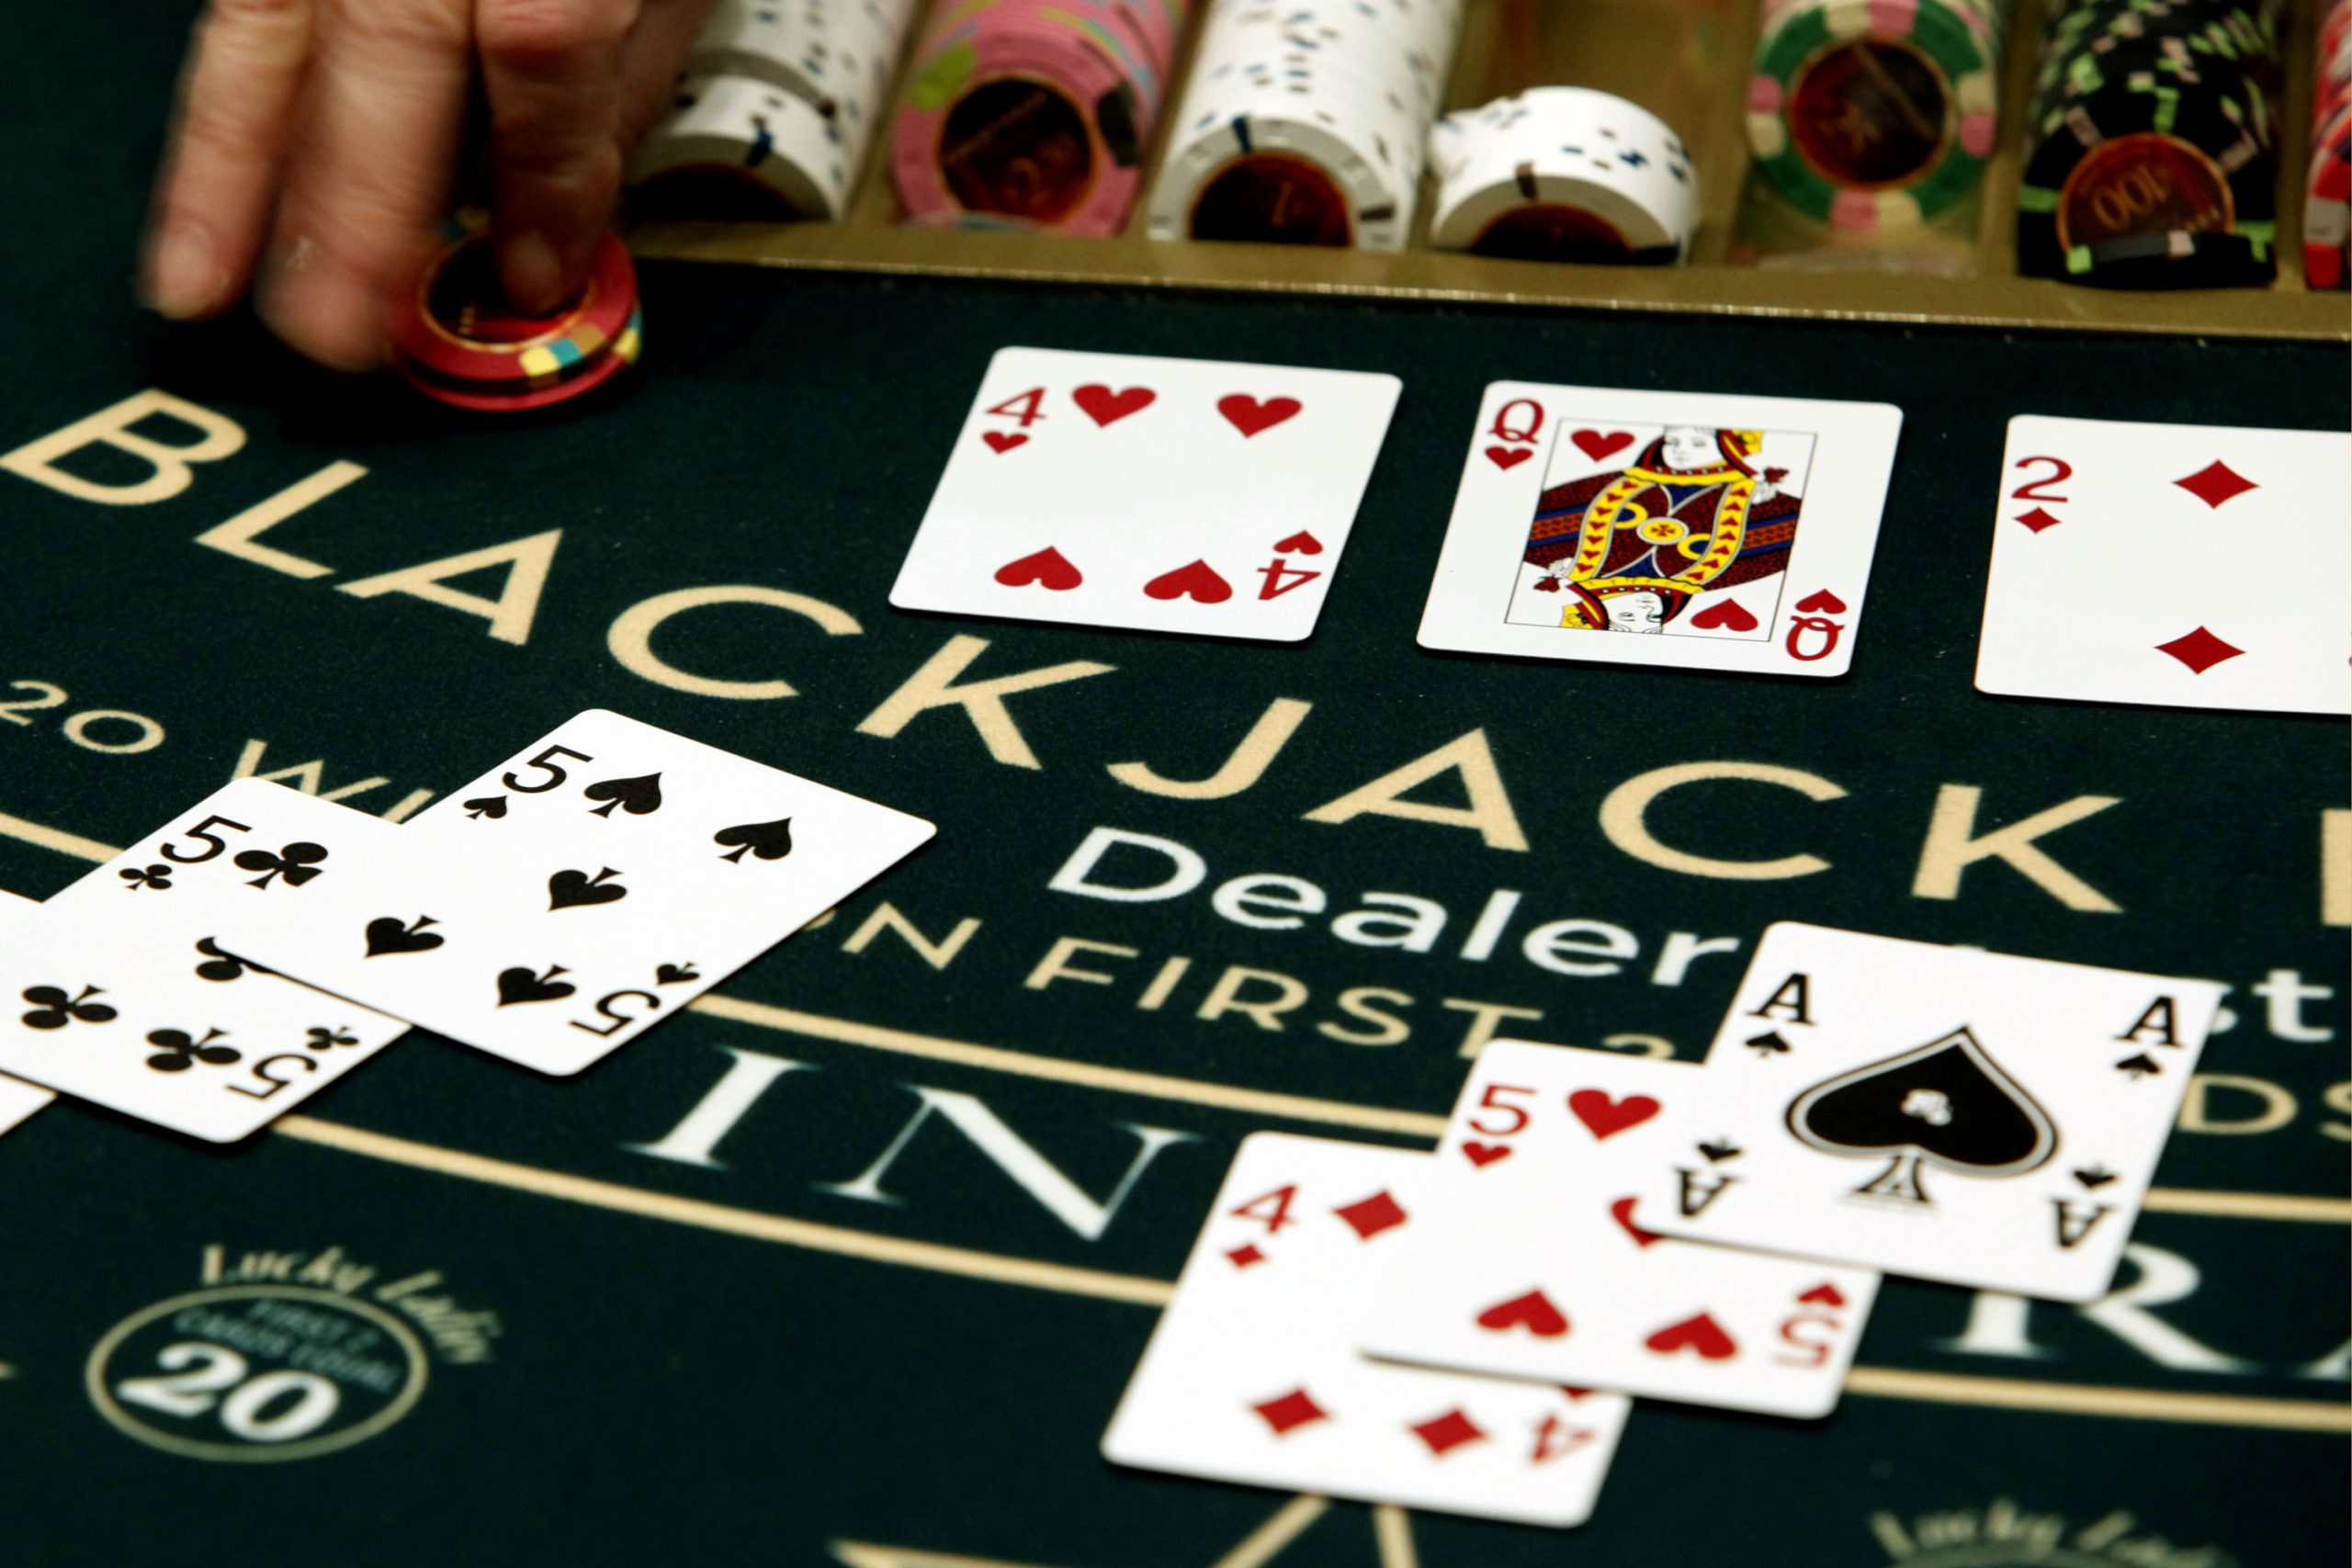 Dispelling myths about blackjack